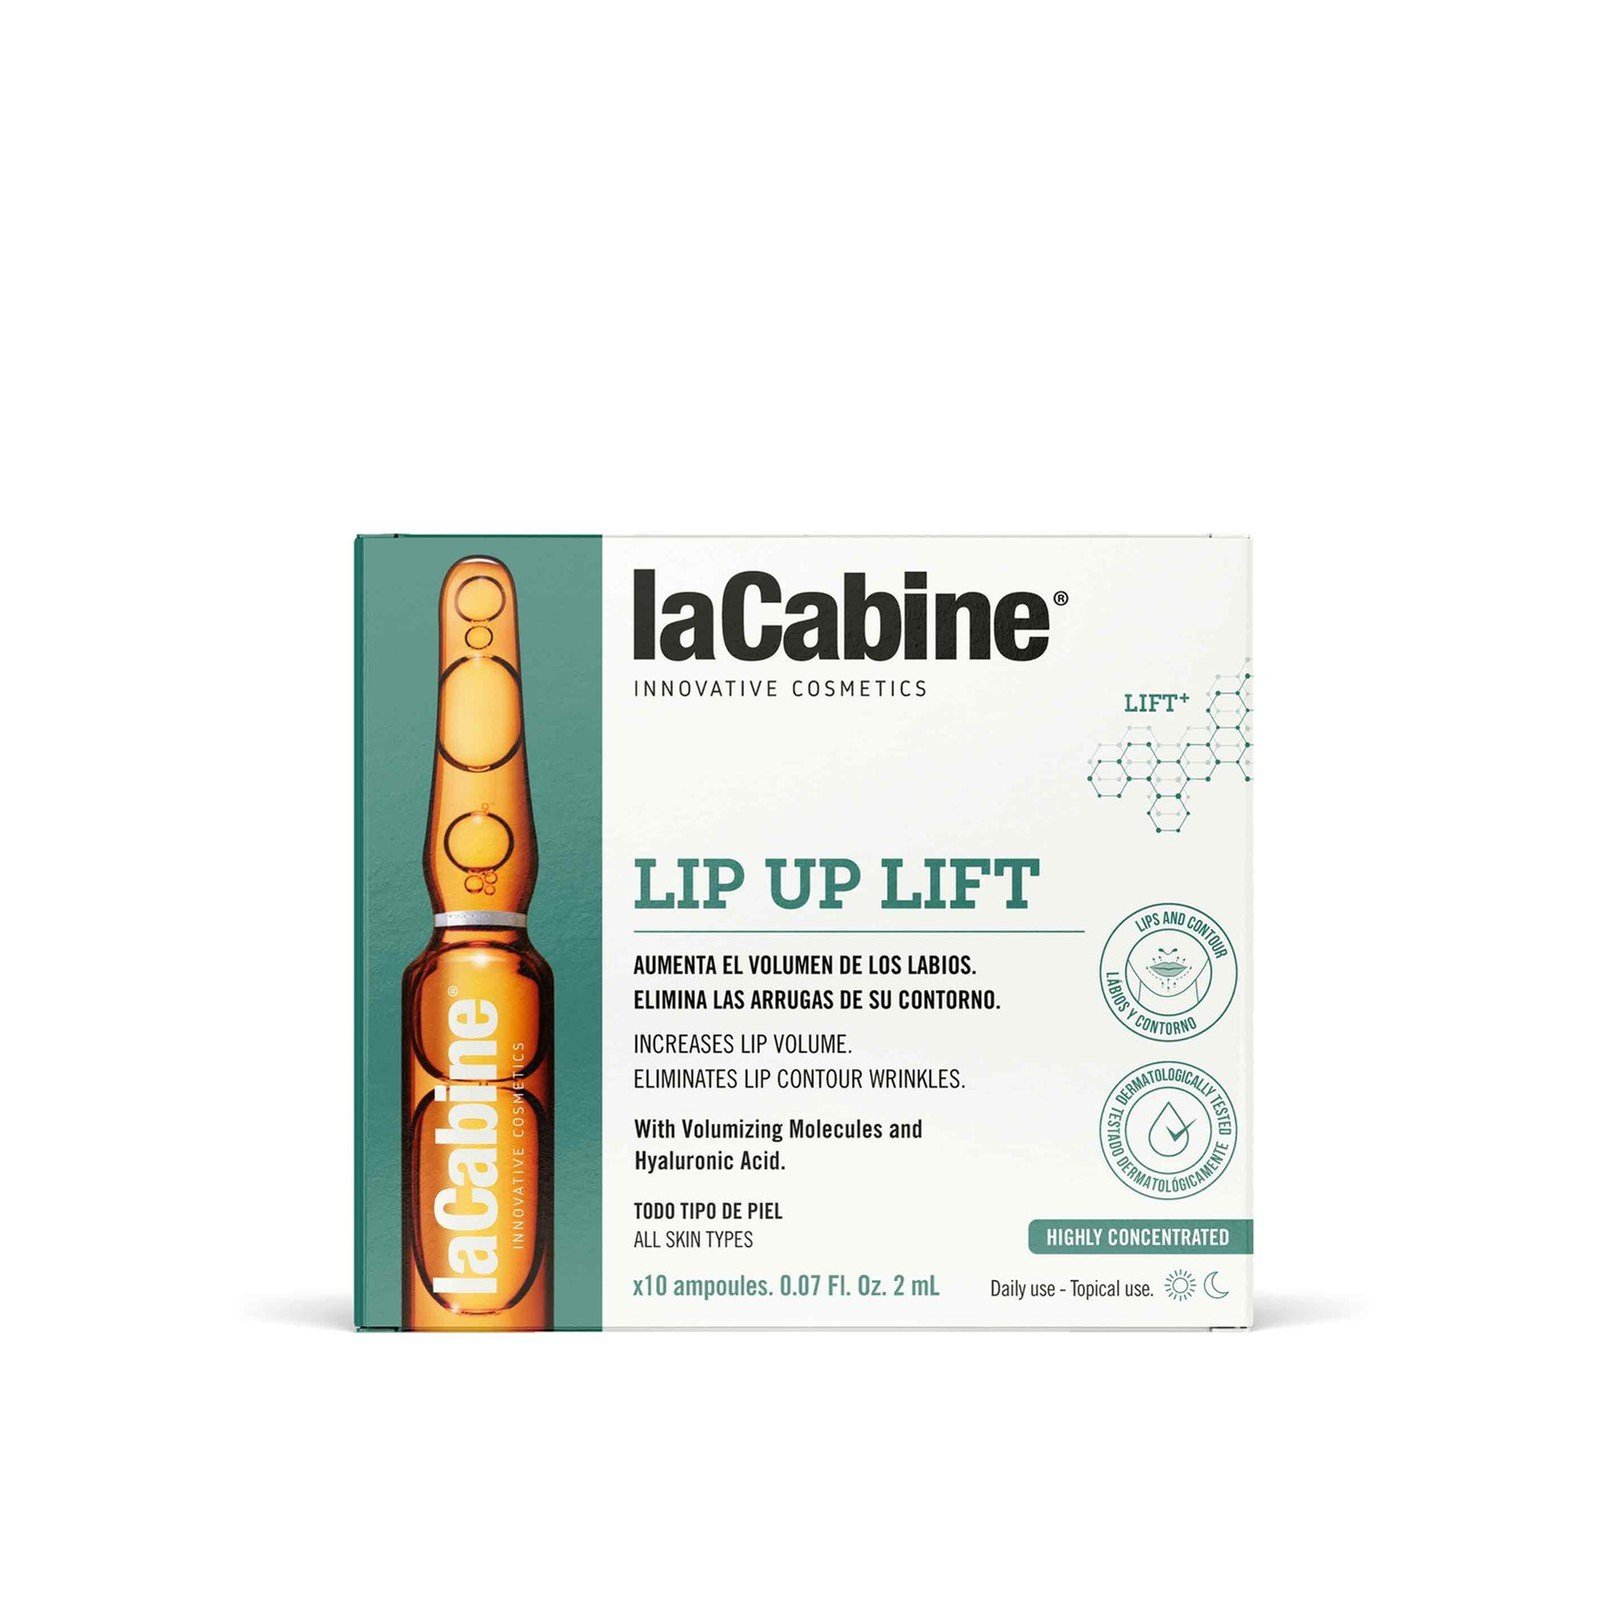 La Cabine Lip Up Lift Concentrated Ampoules 10x2ml (10x0.07 fl oz)